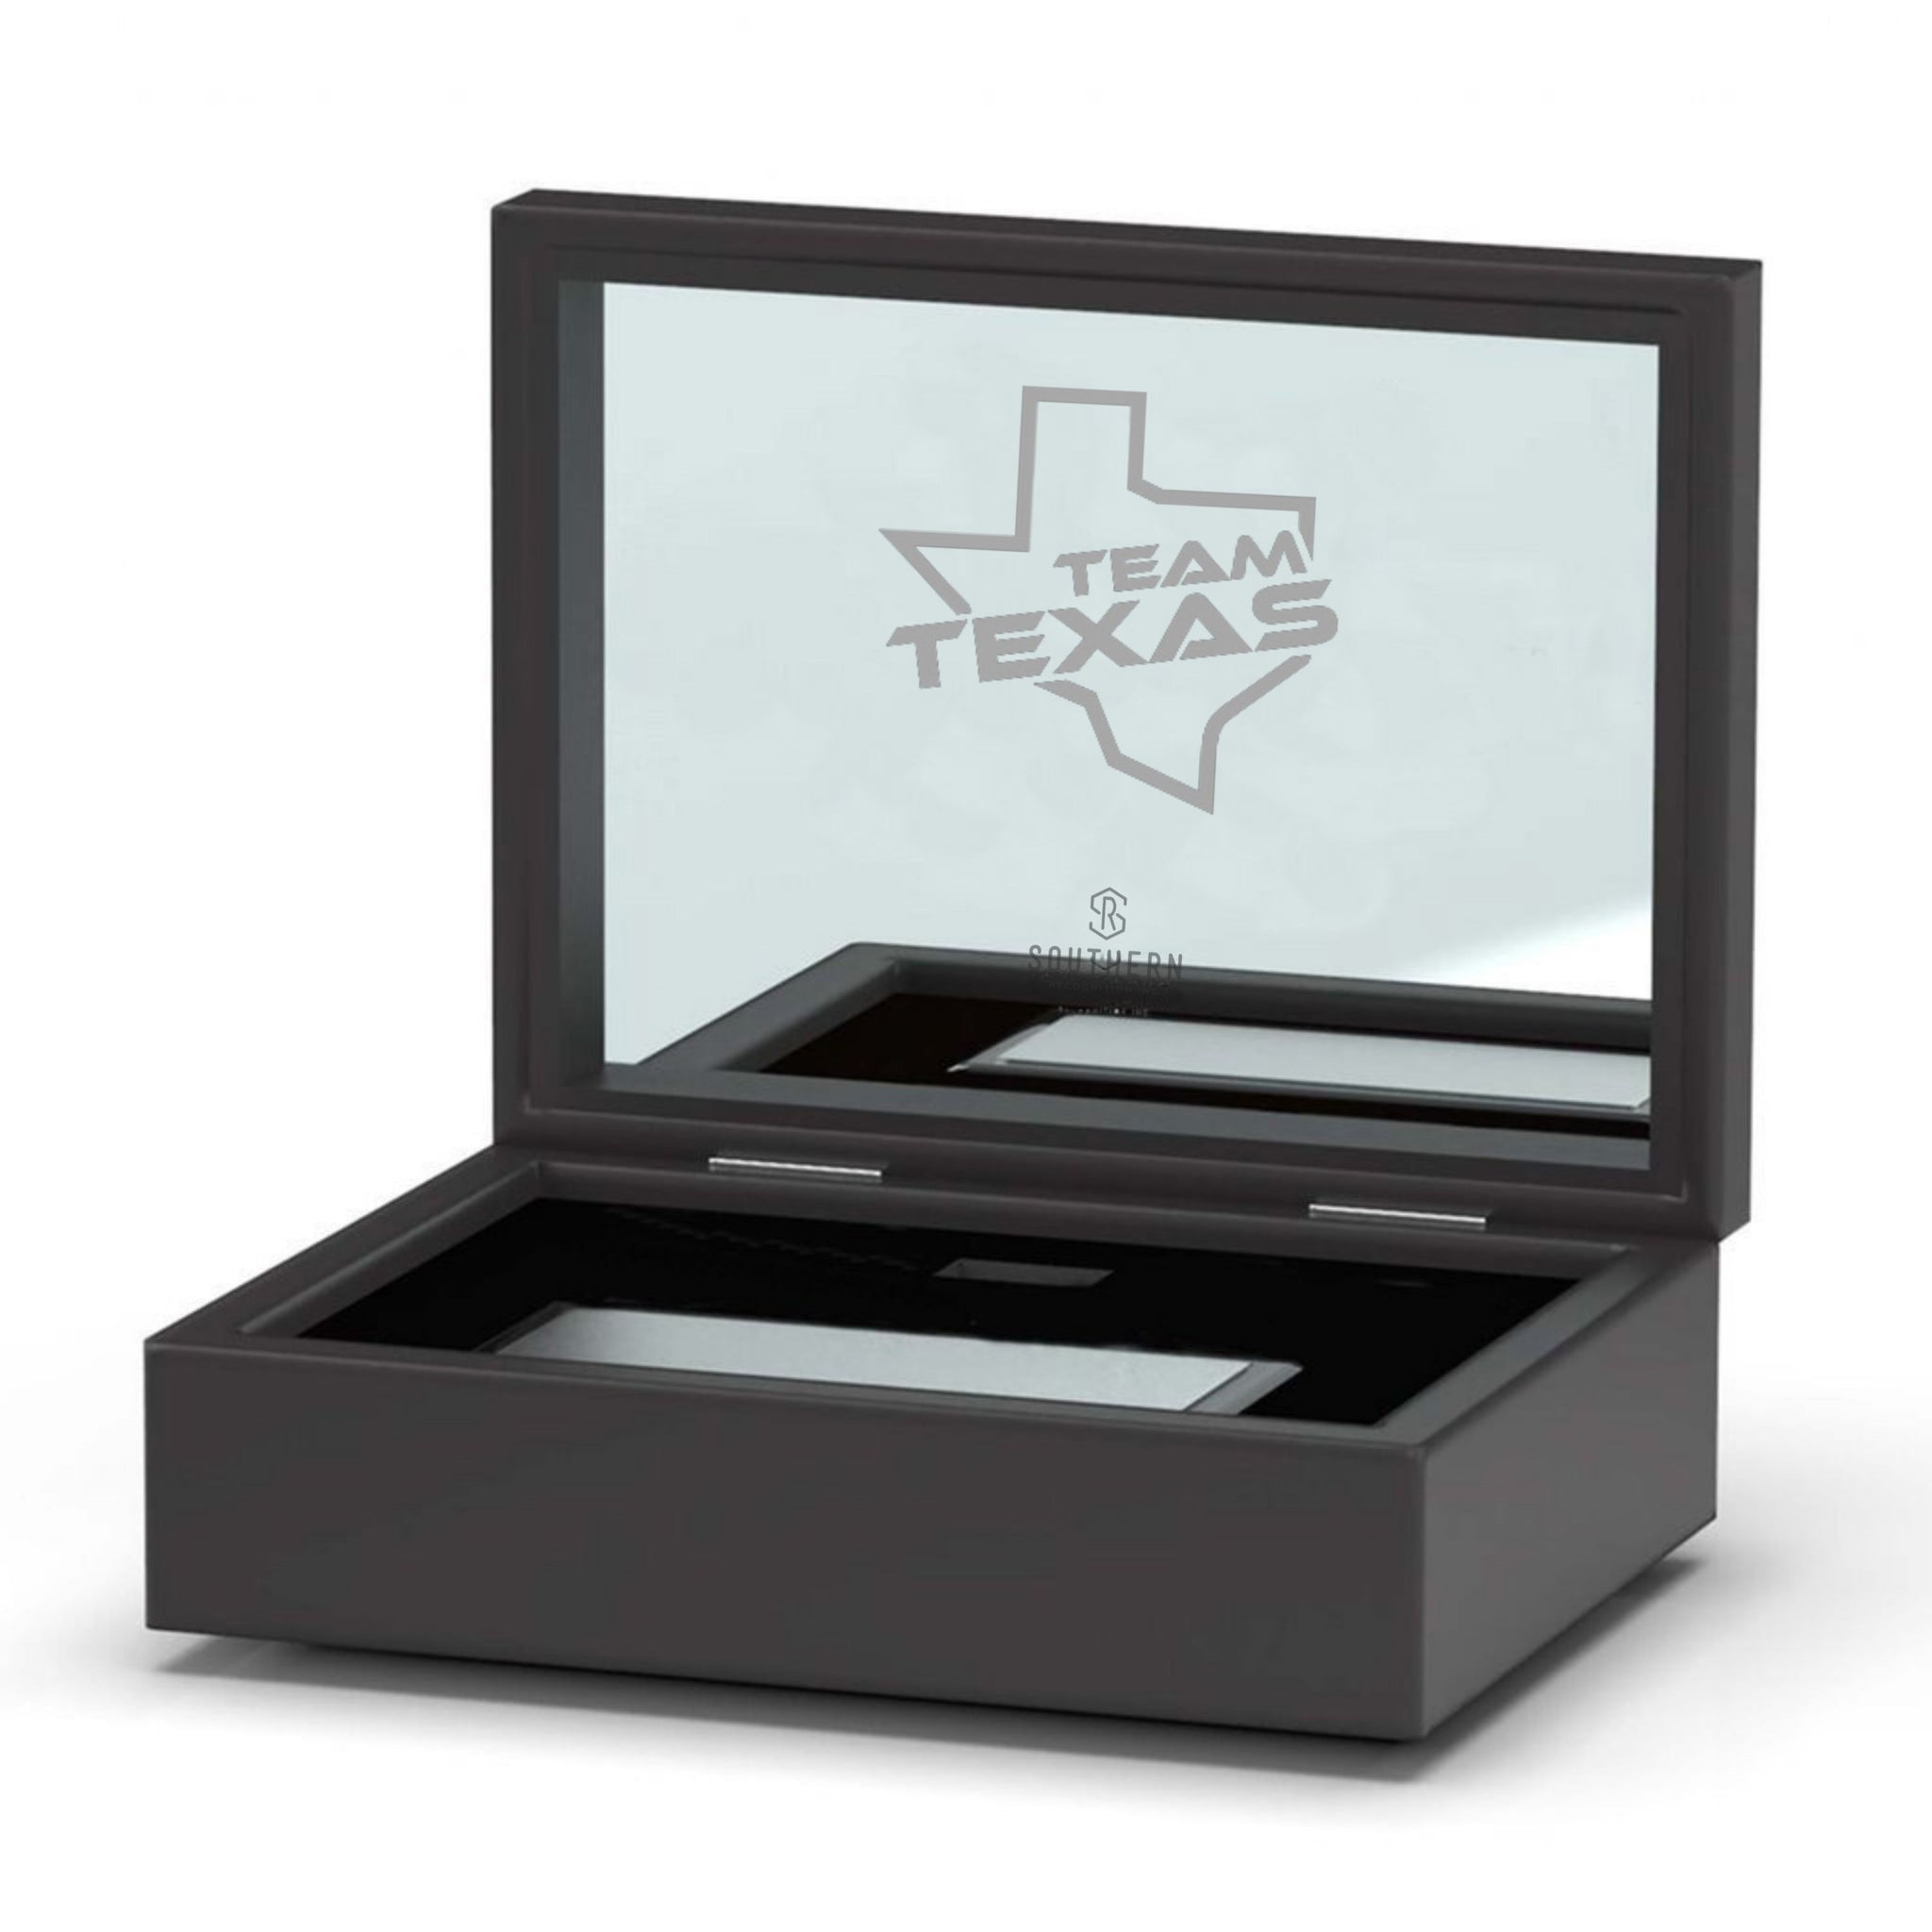 Team Texas - Custom Presentation Box